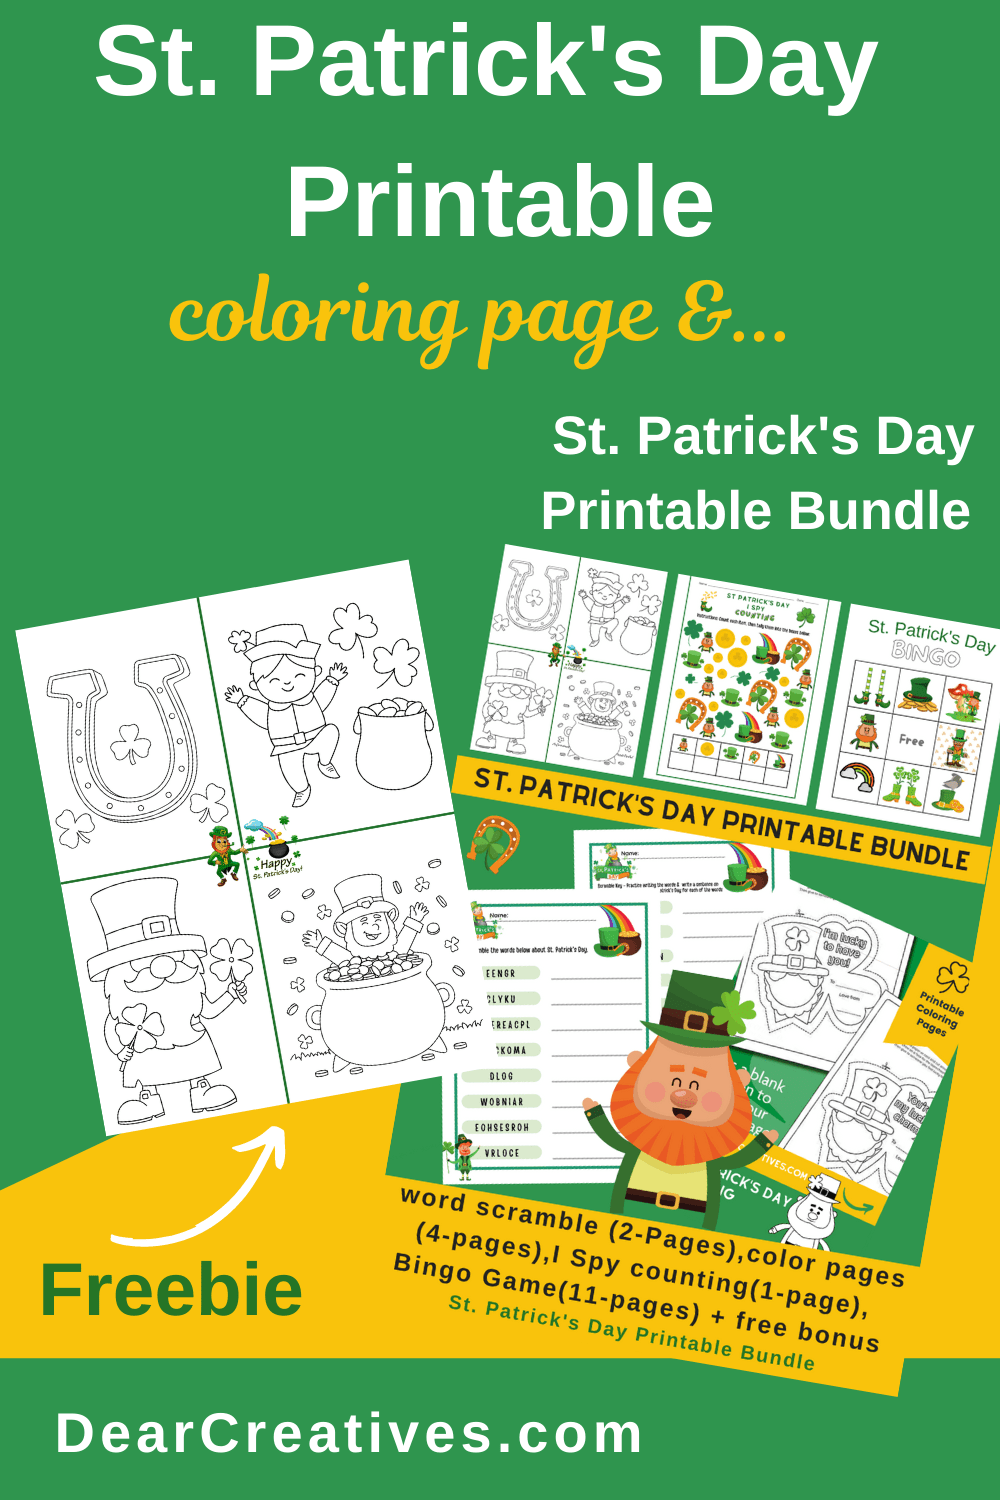 St. Patrick’s Day Coloring Page Printable +Bundle!